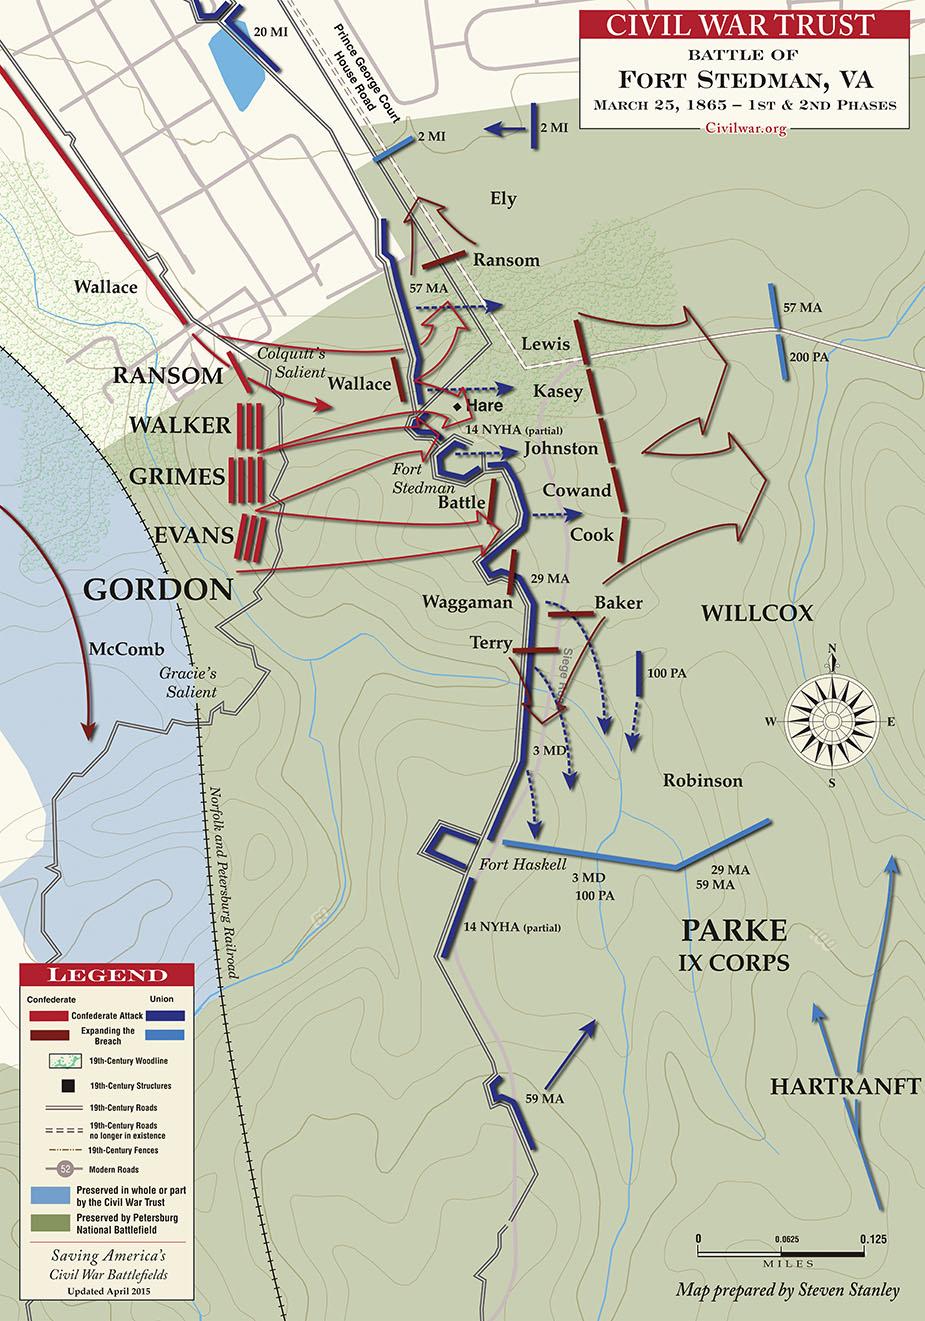 Fort Stedman | Initial Phase | Mar 25, 1865